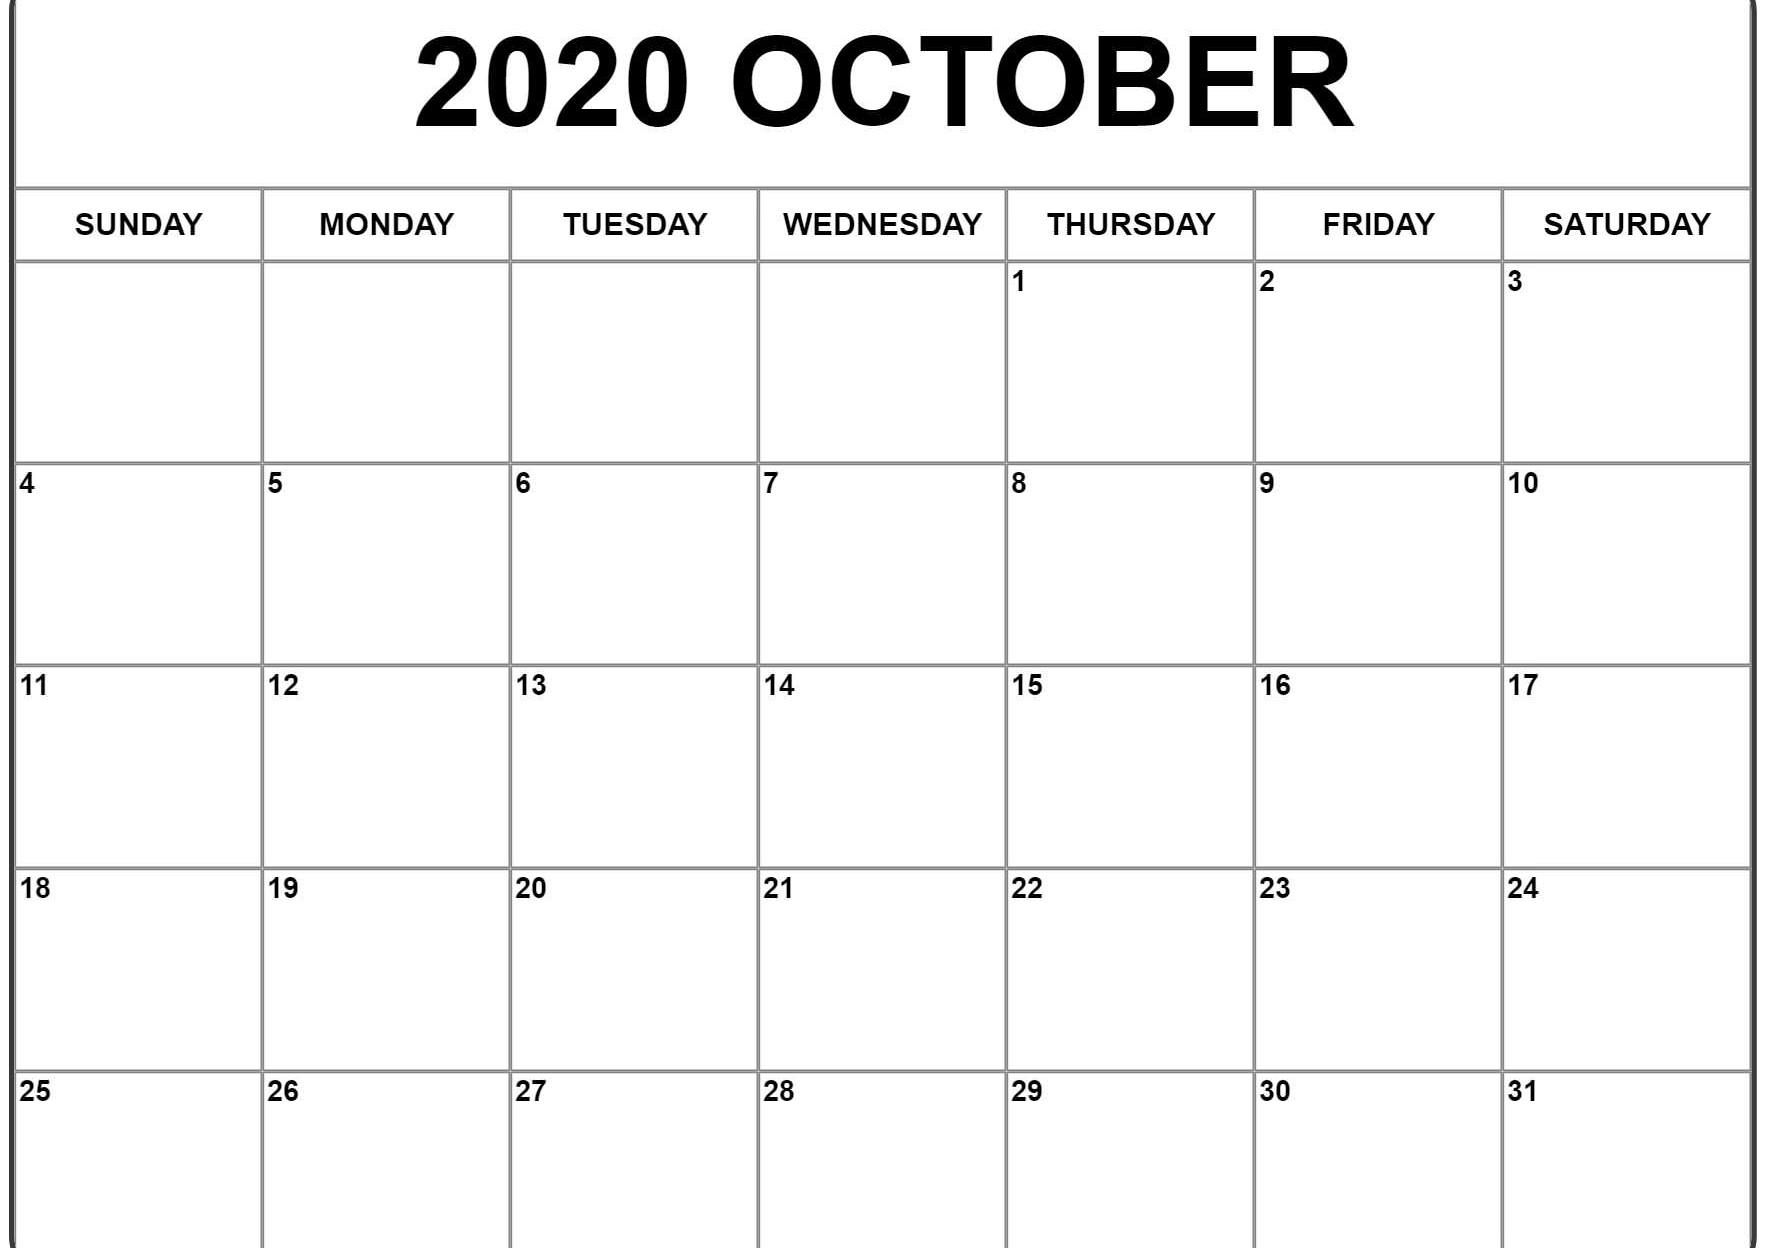 October 2020 Calendar Pdf, Word, Excel Template 2 | October